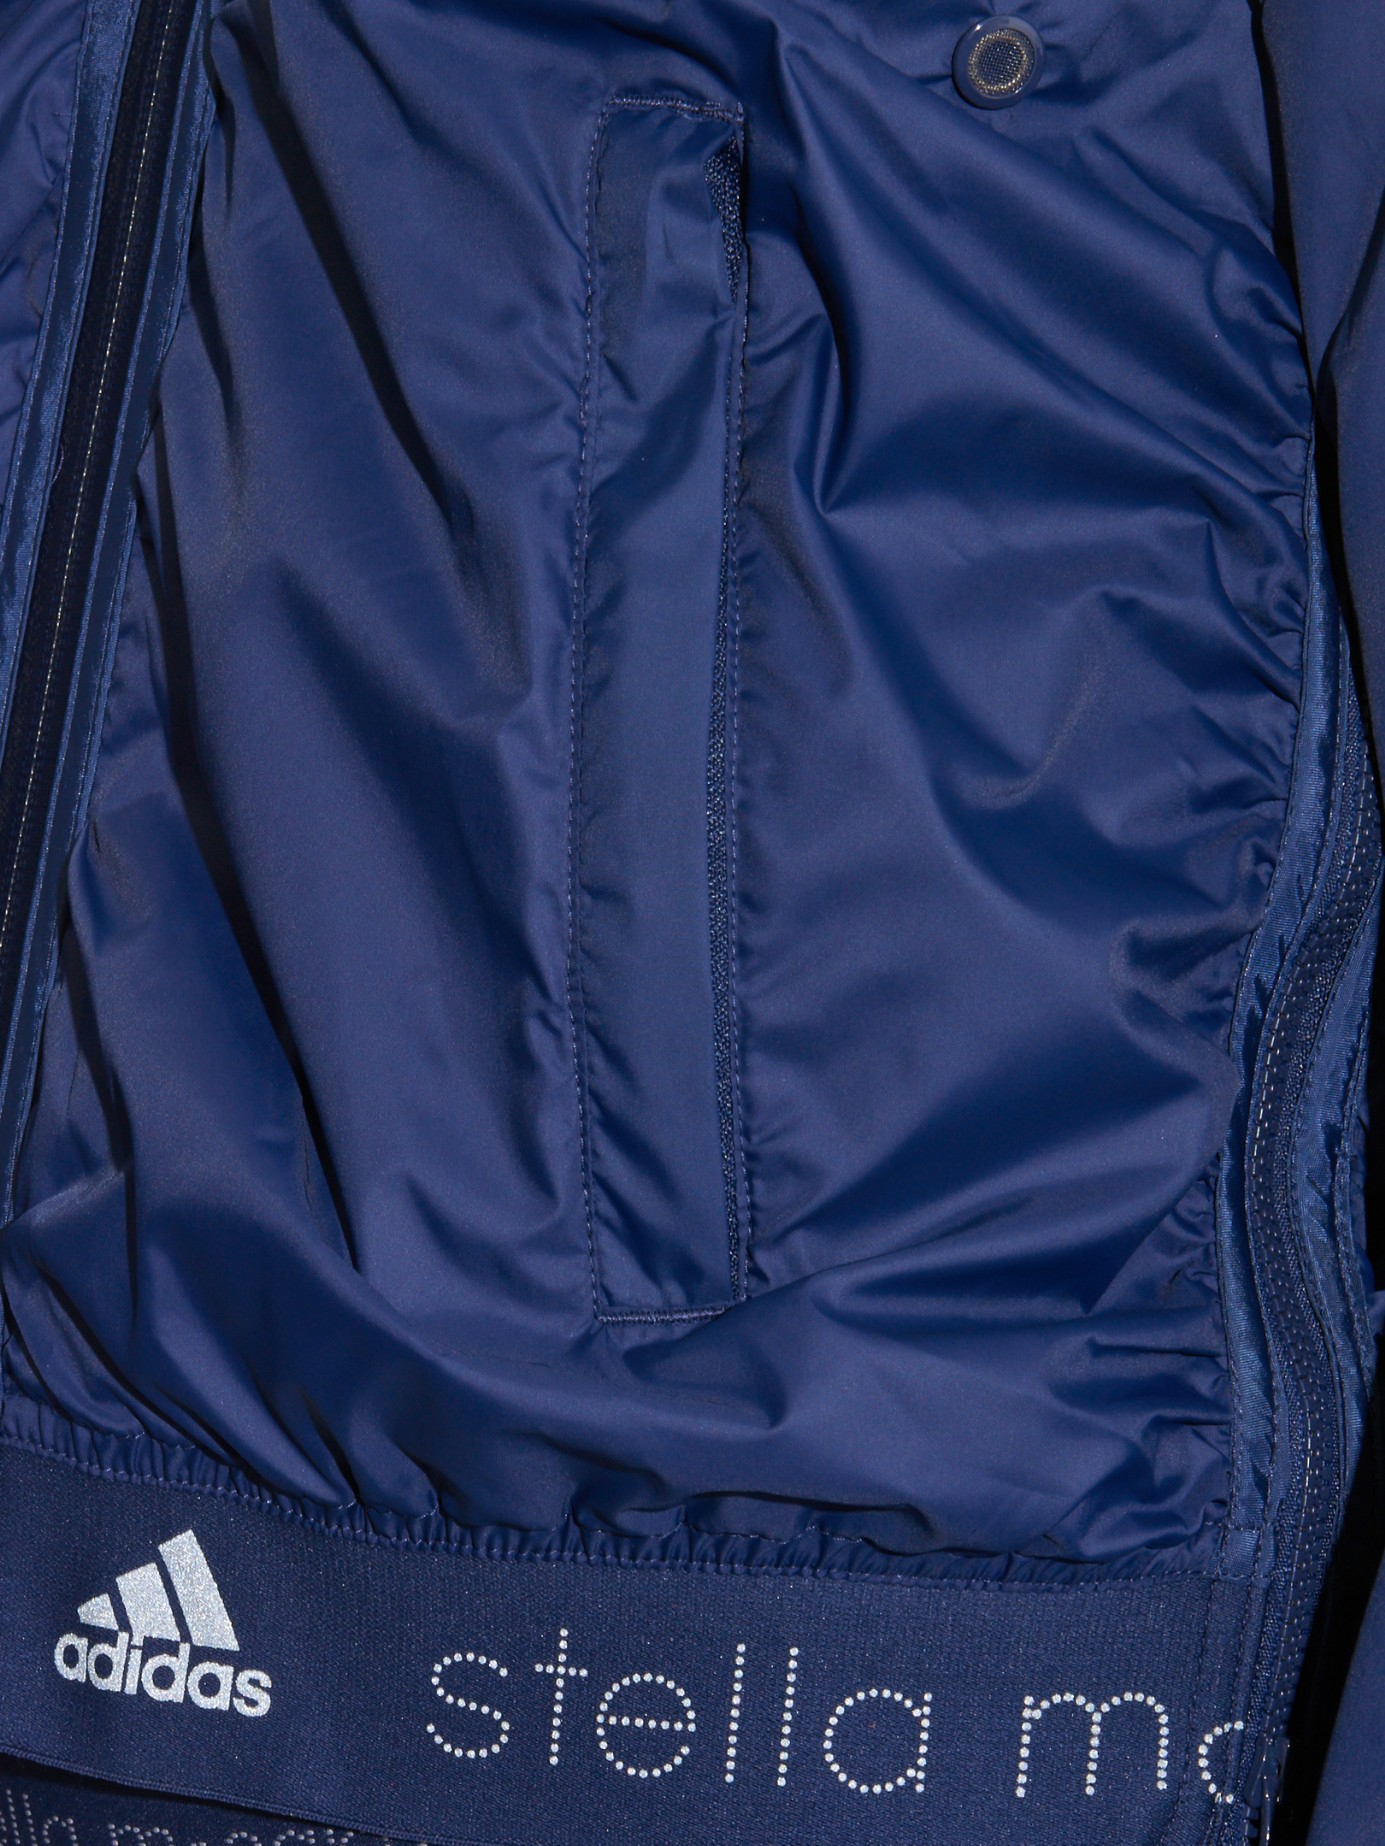 adidas By Stella McCartney Printed-Shoulder Performance Jacket in Navy  (Blue) | Lyst